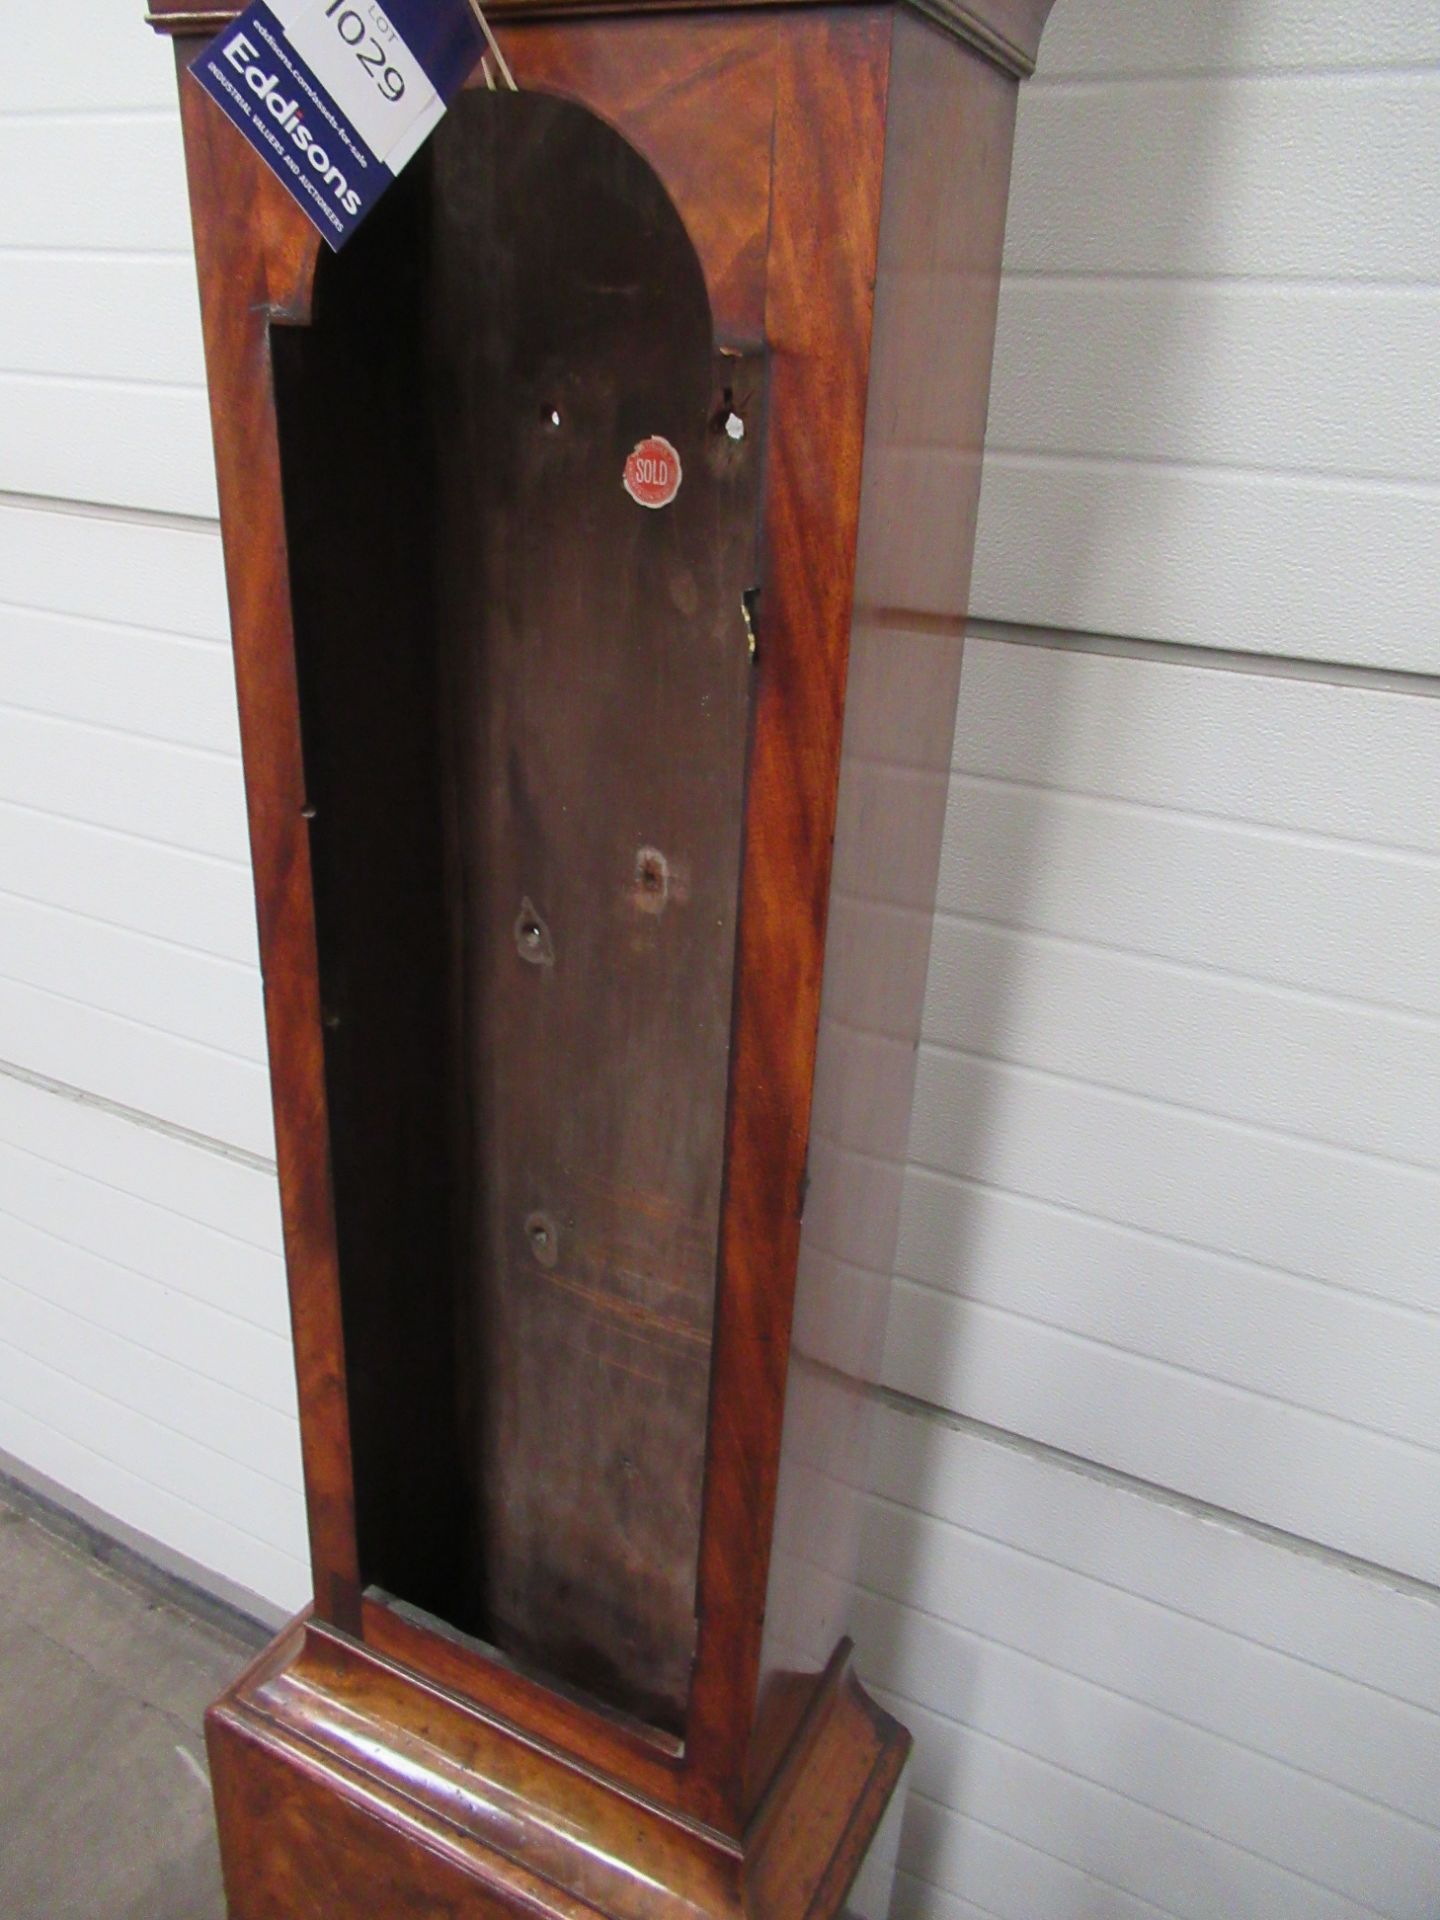 Mahogany Longcase Clock Case - No Mechanism or Face, Just Case & Hood - No door - Image 3 of 4